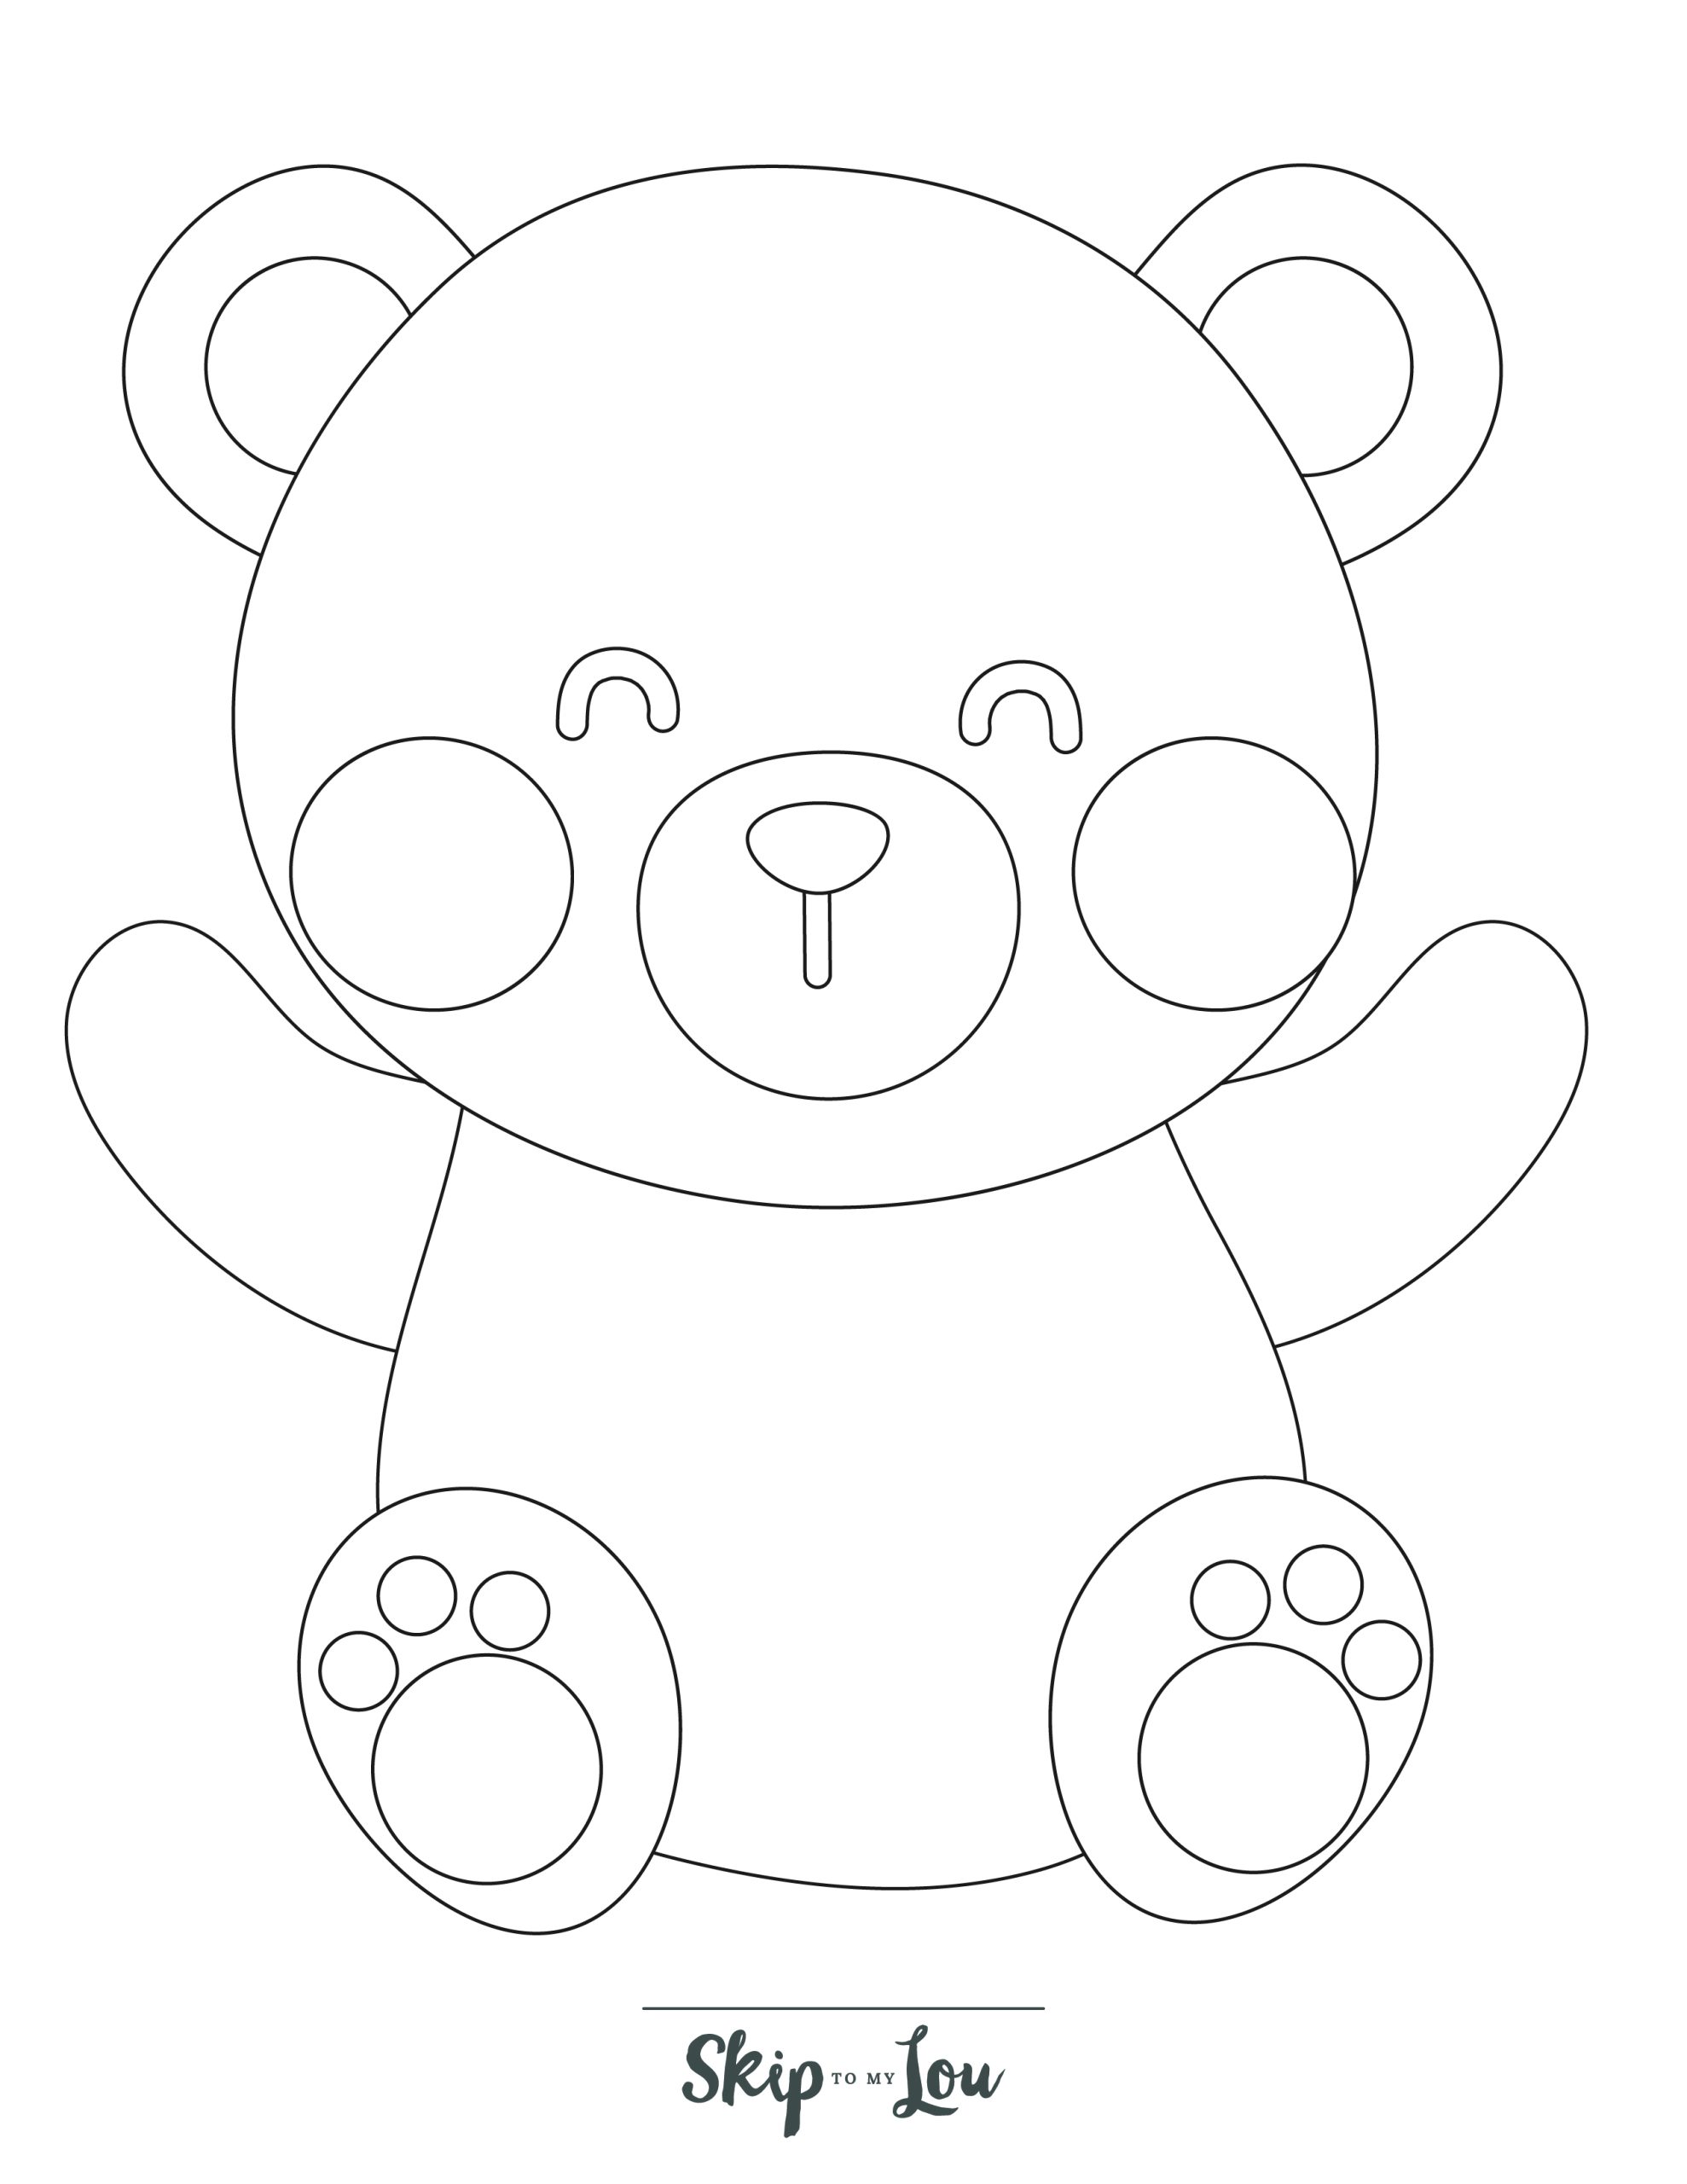 Preschool Coloring Page 11 - Simple line drawing of a teddybear 